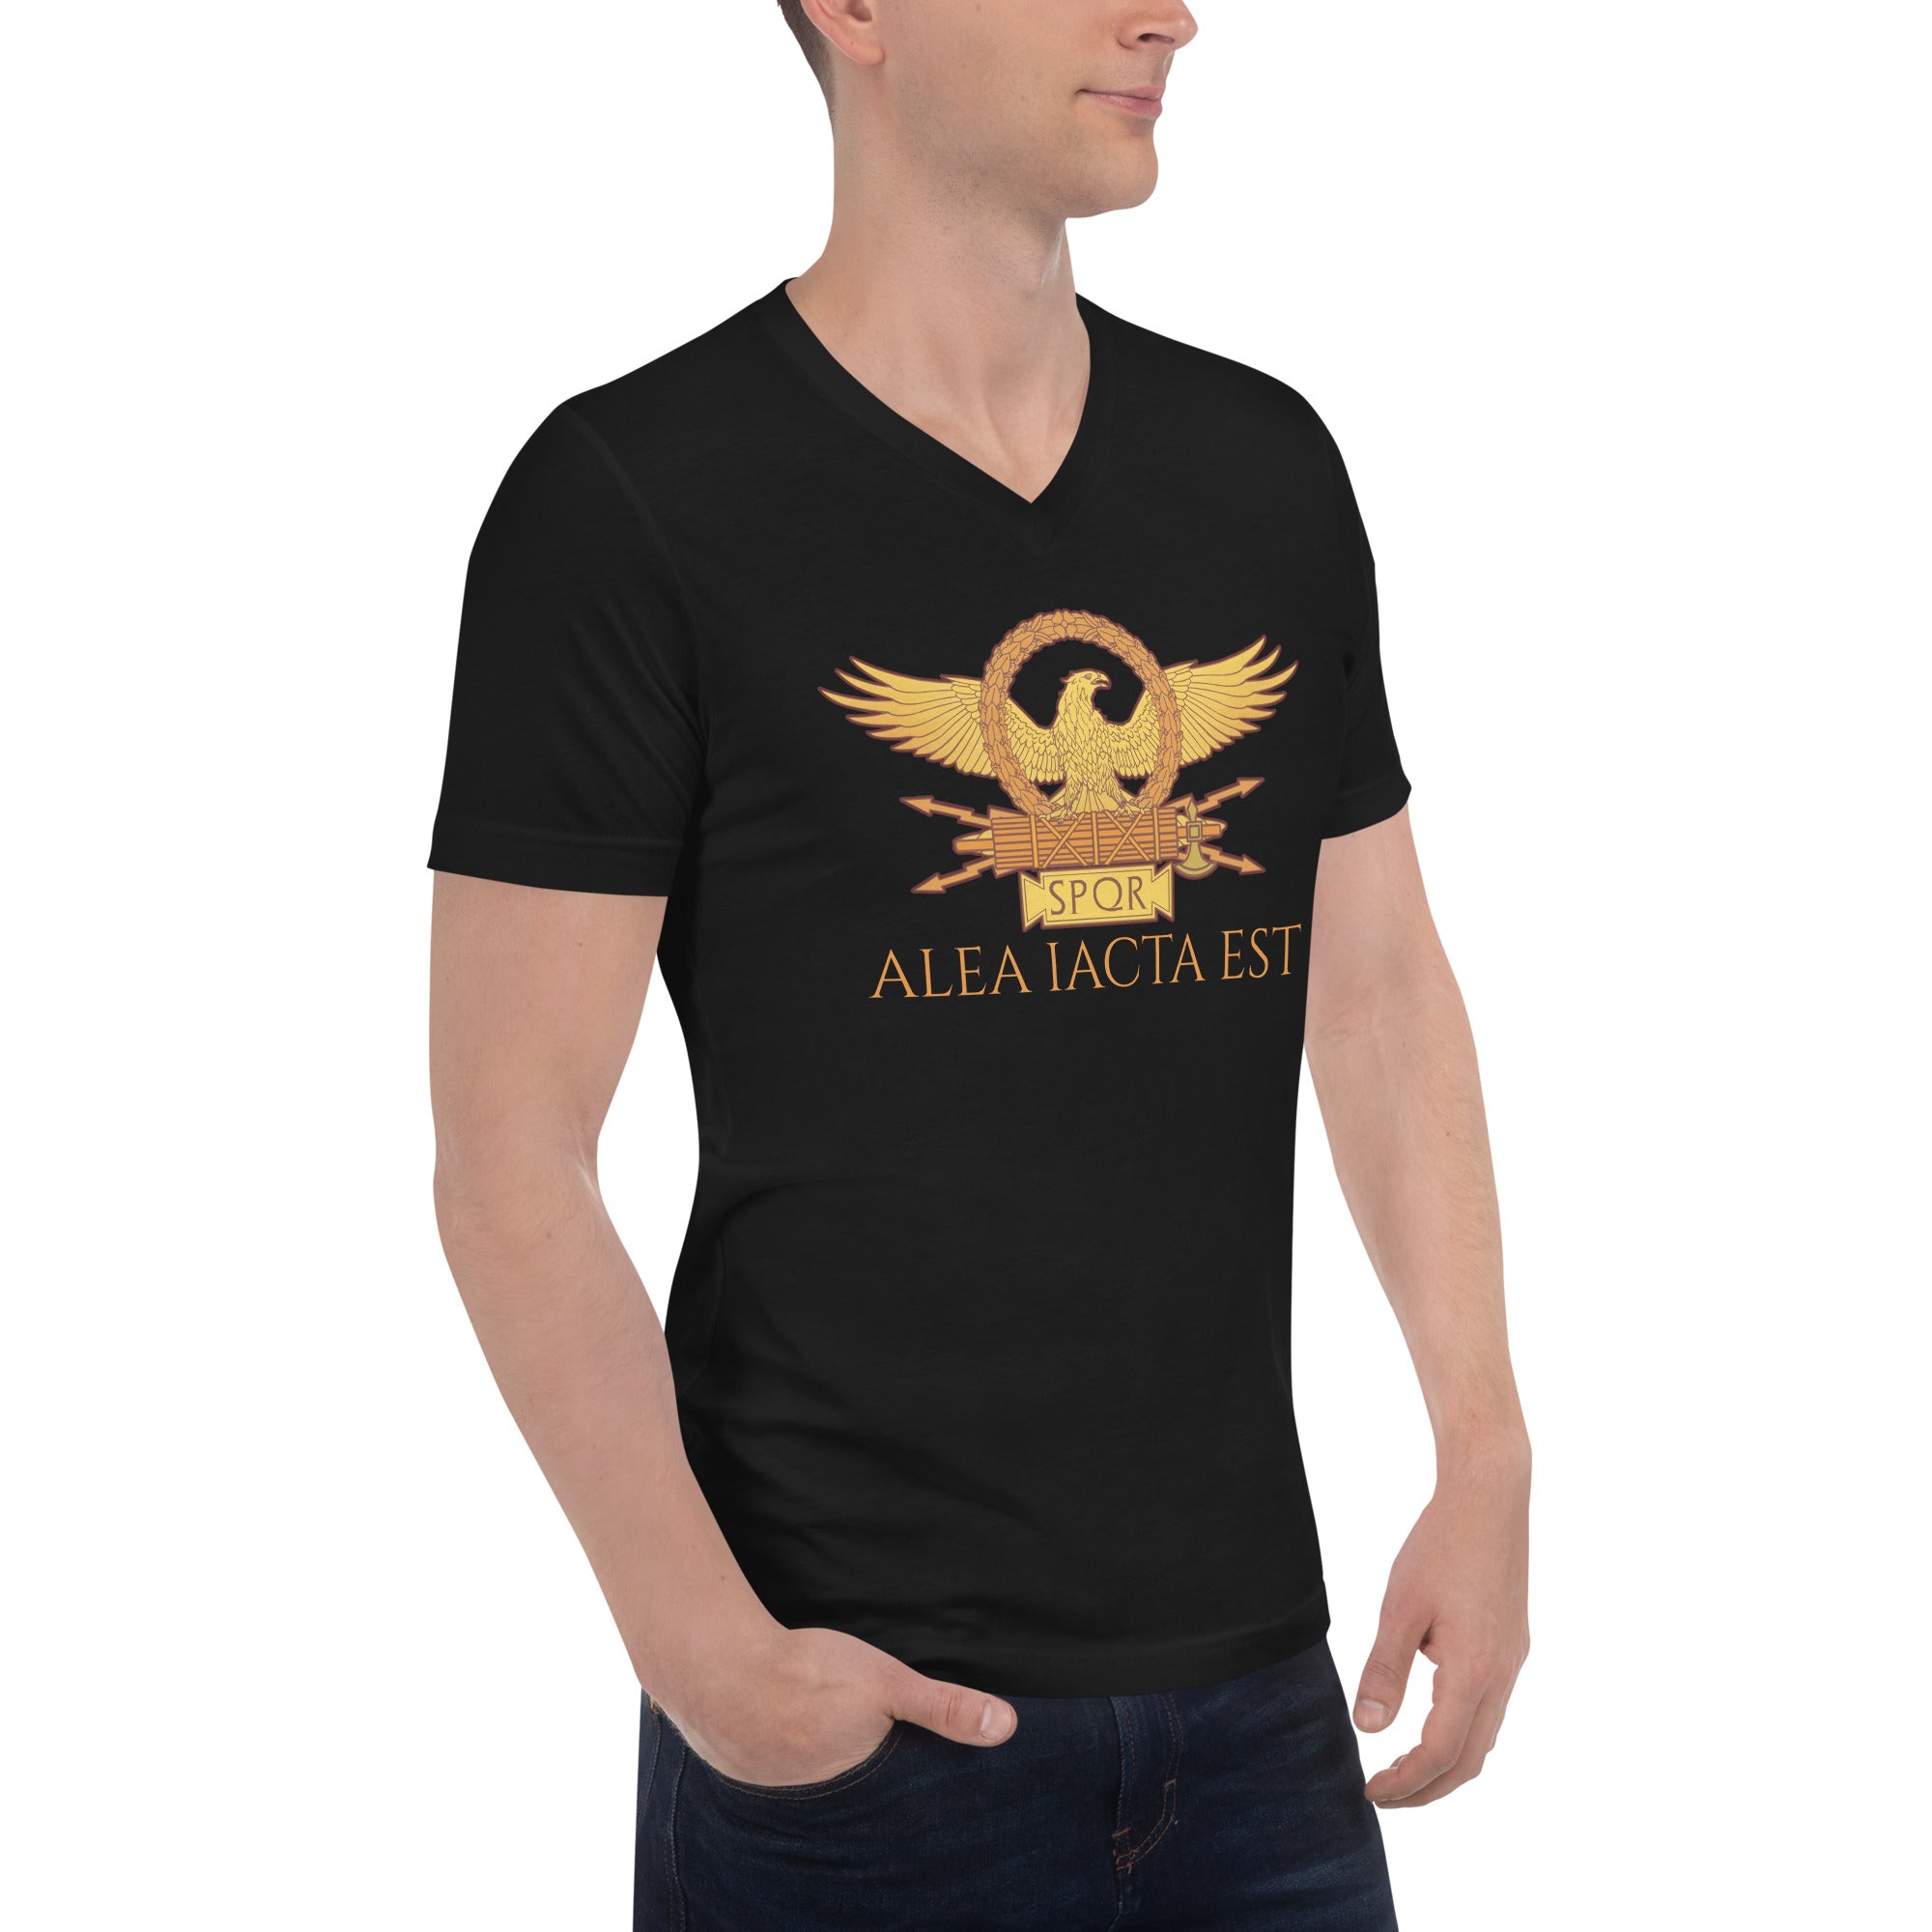 Alea Iacta Est - Julius Caesar - Ancient Rome - Unisex Short Sleeve V-Neck T-Shirt